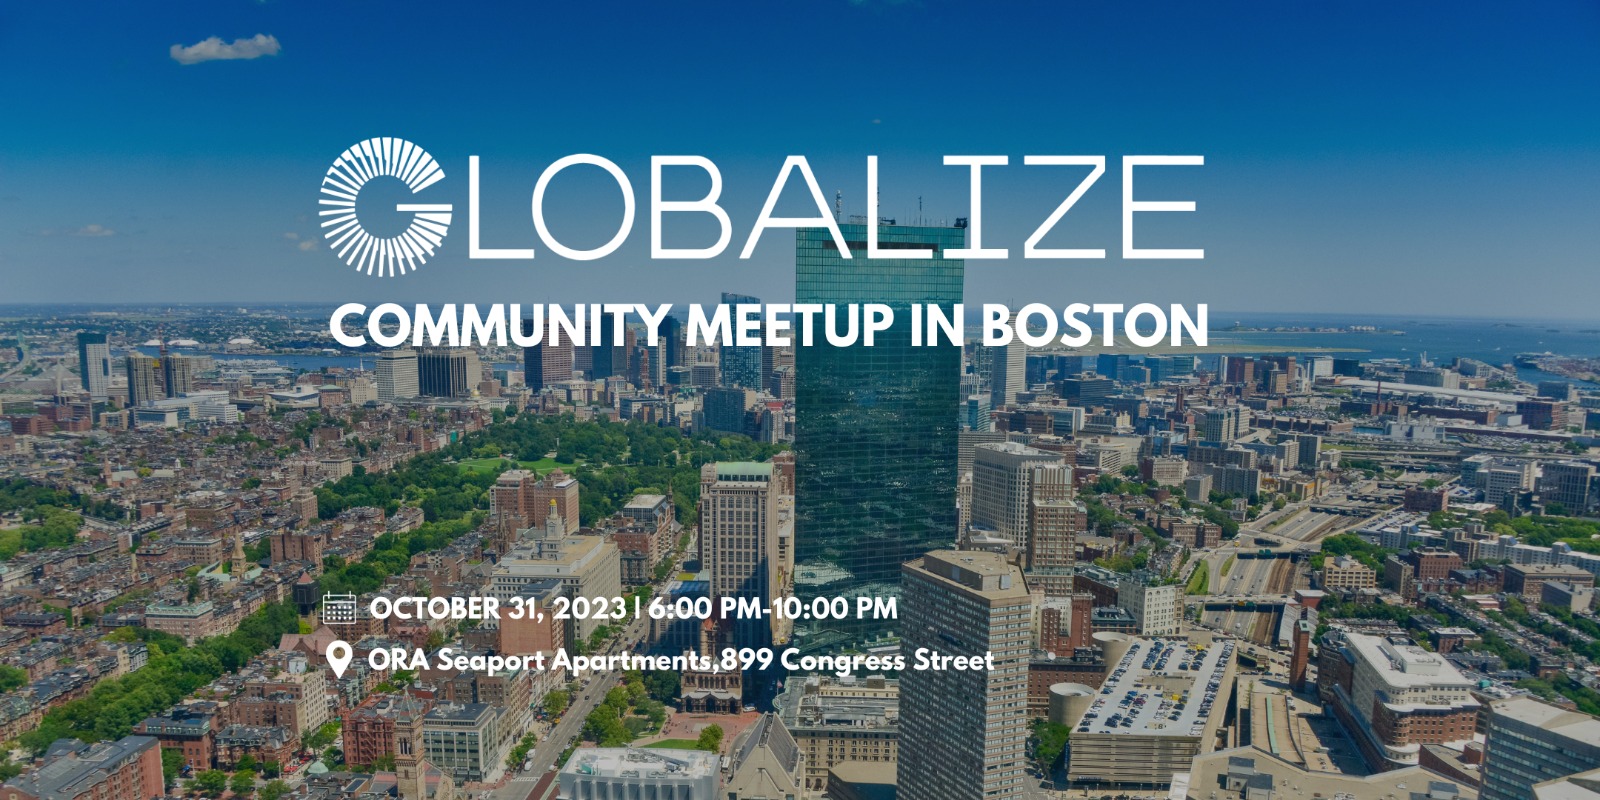 Globalize Community Meetup in Boston